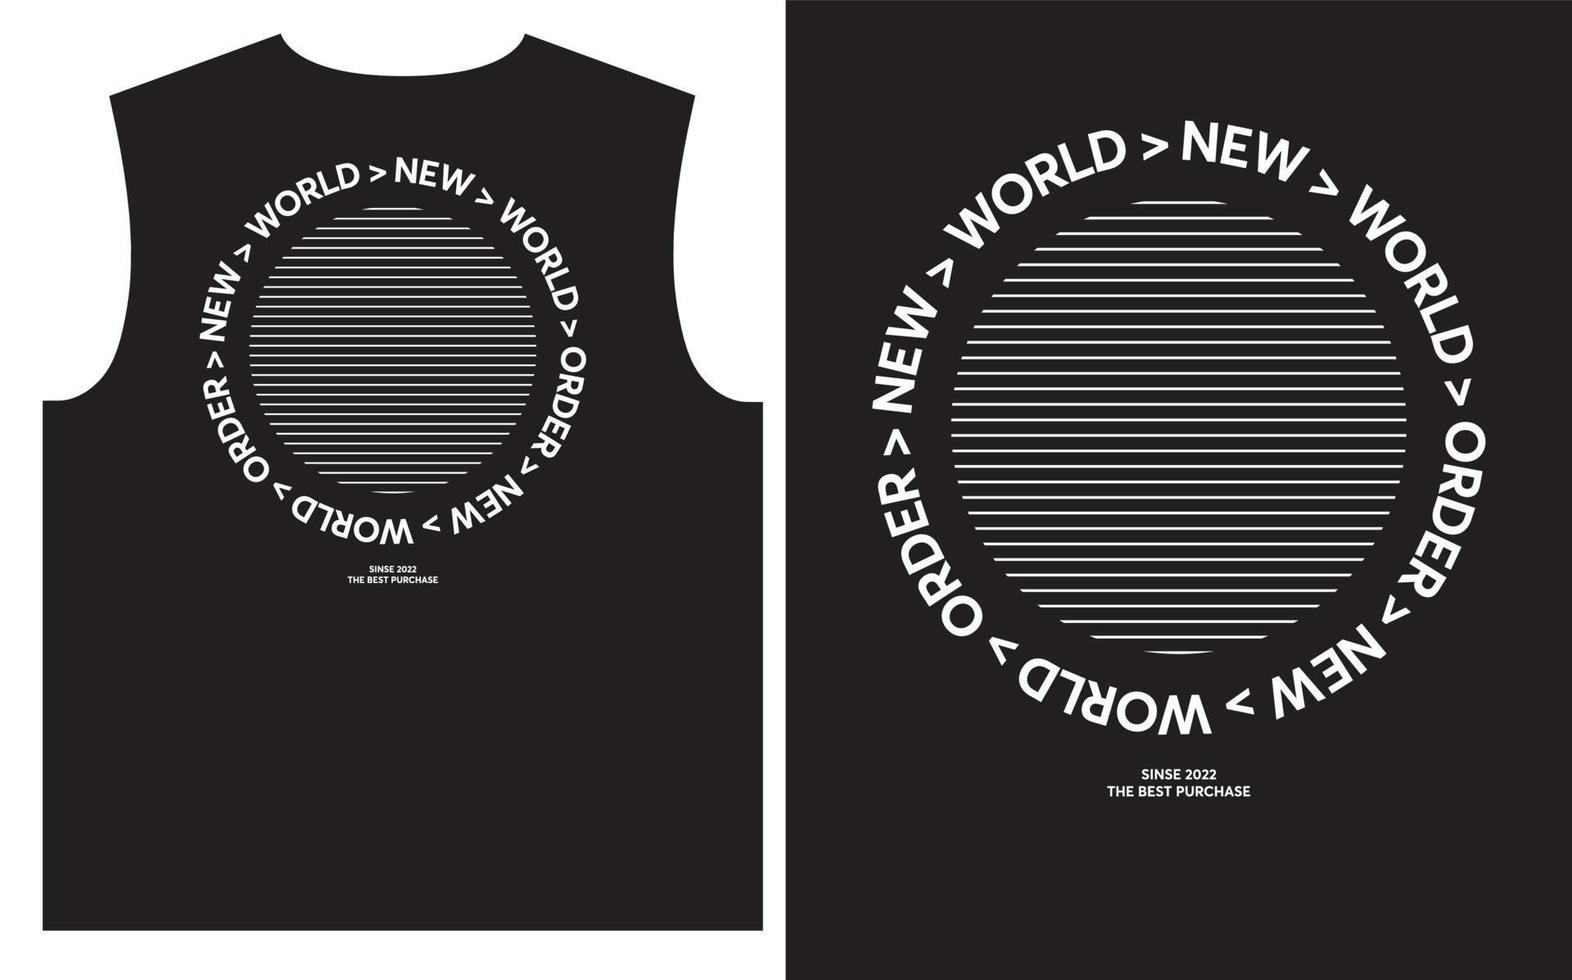 nova ordem mundial. slogan para modelo de camiseta vetor